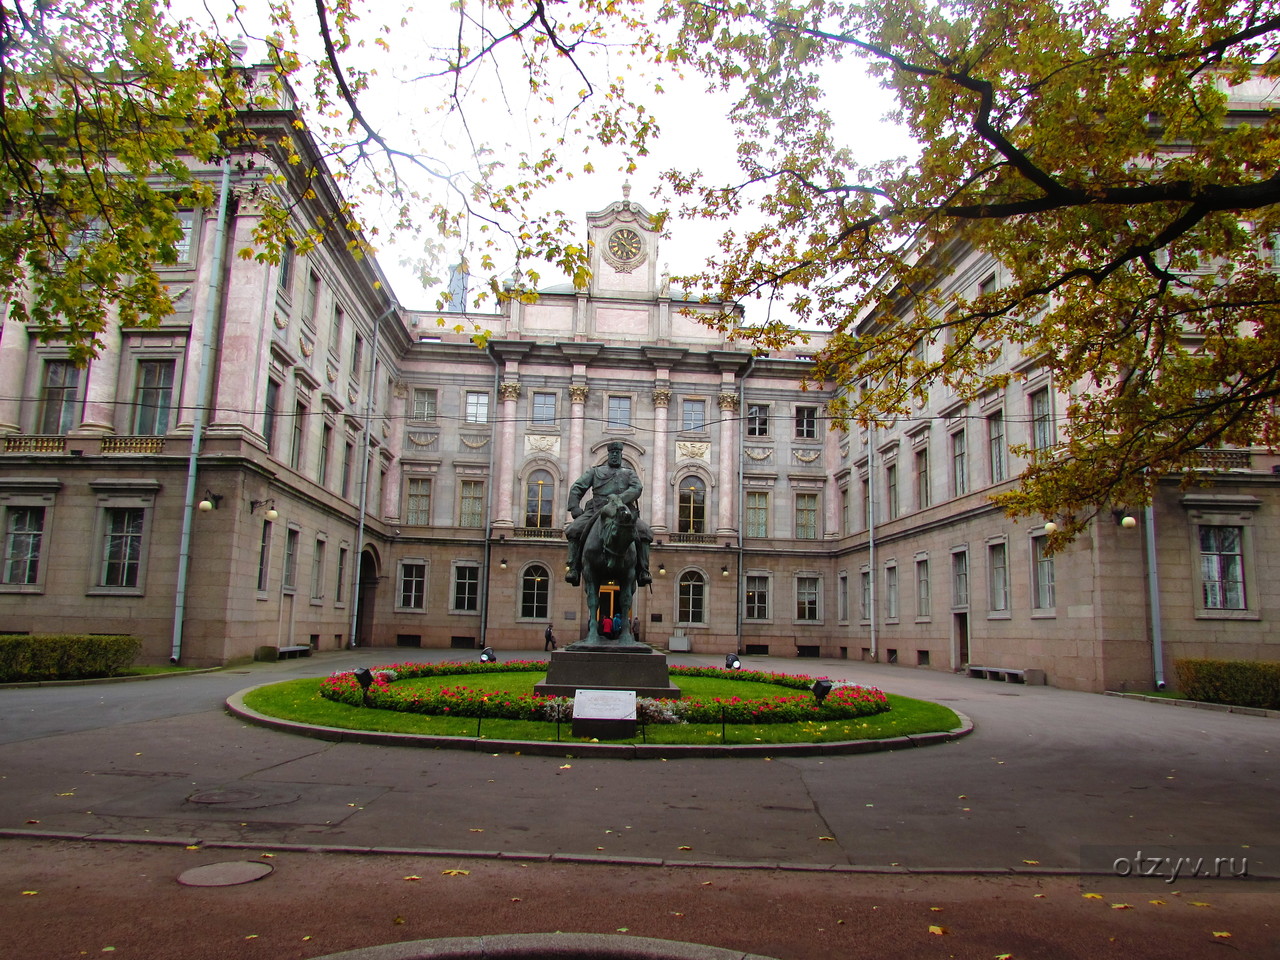 Мраморный дворец санкт петербург